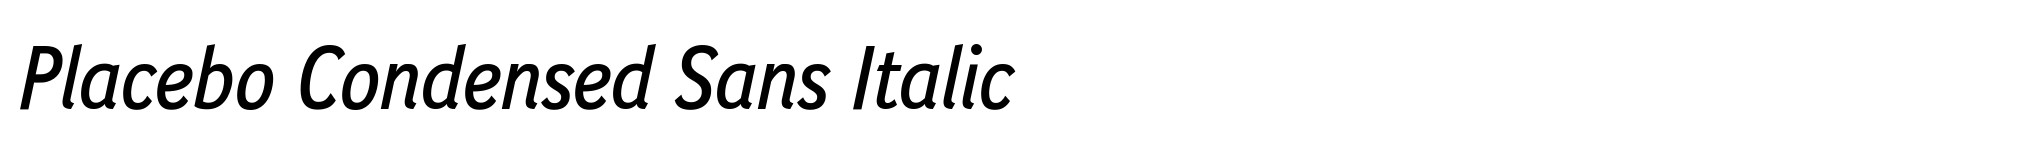 Placebo Condensed Sans Italic image